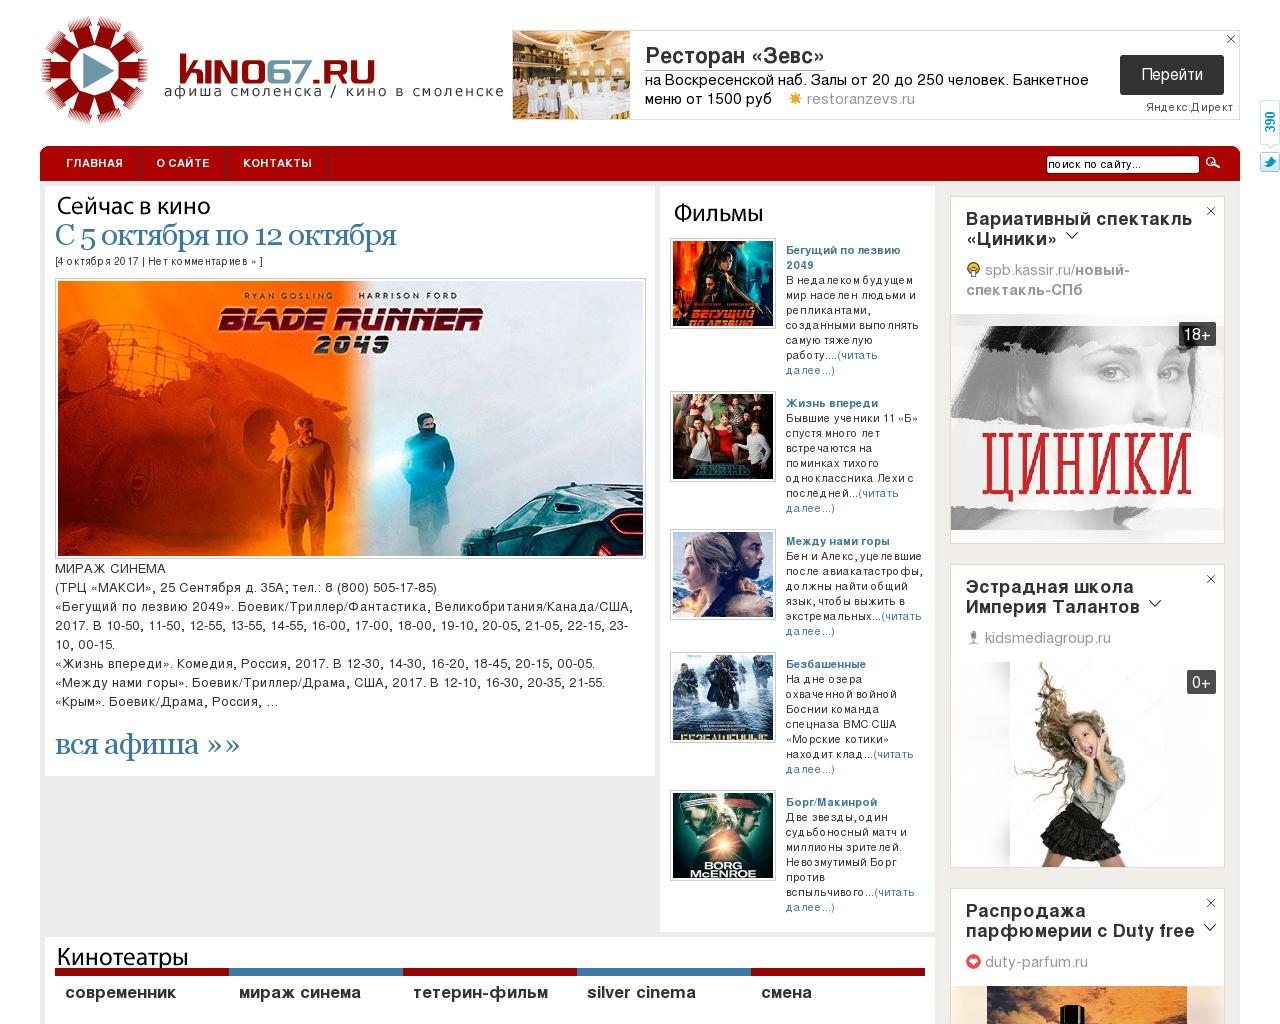 Изображение сайта kino67.ru в разрешении 1280x1024